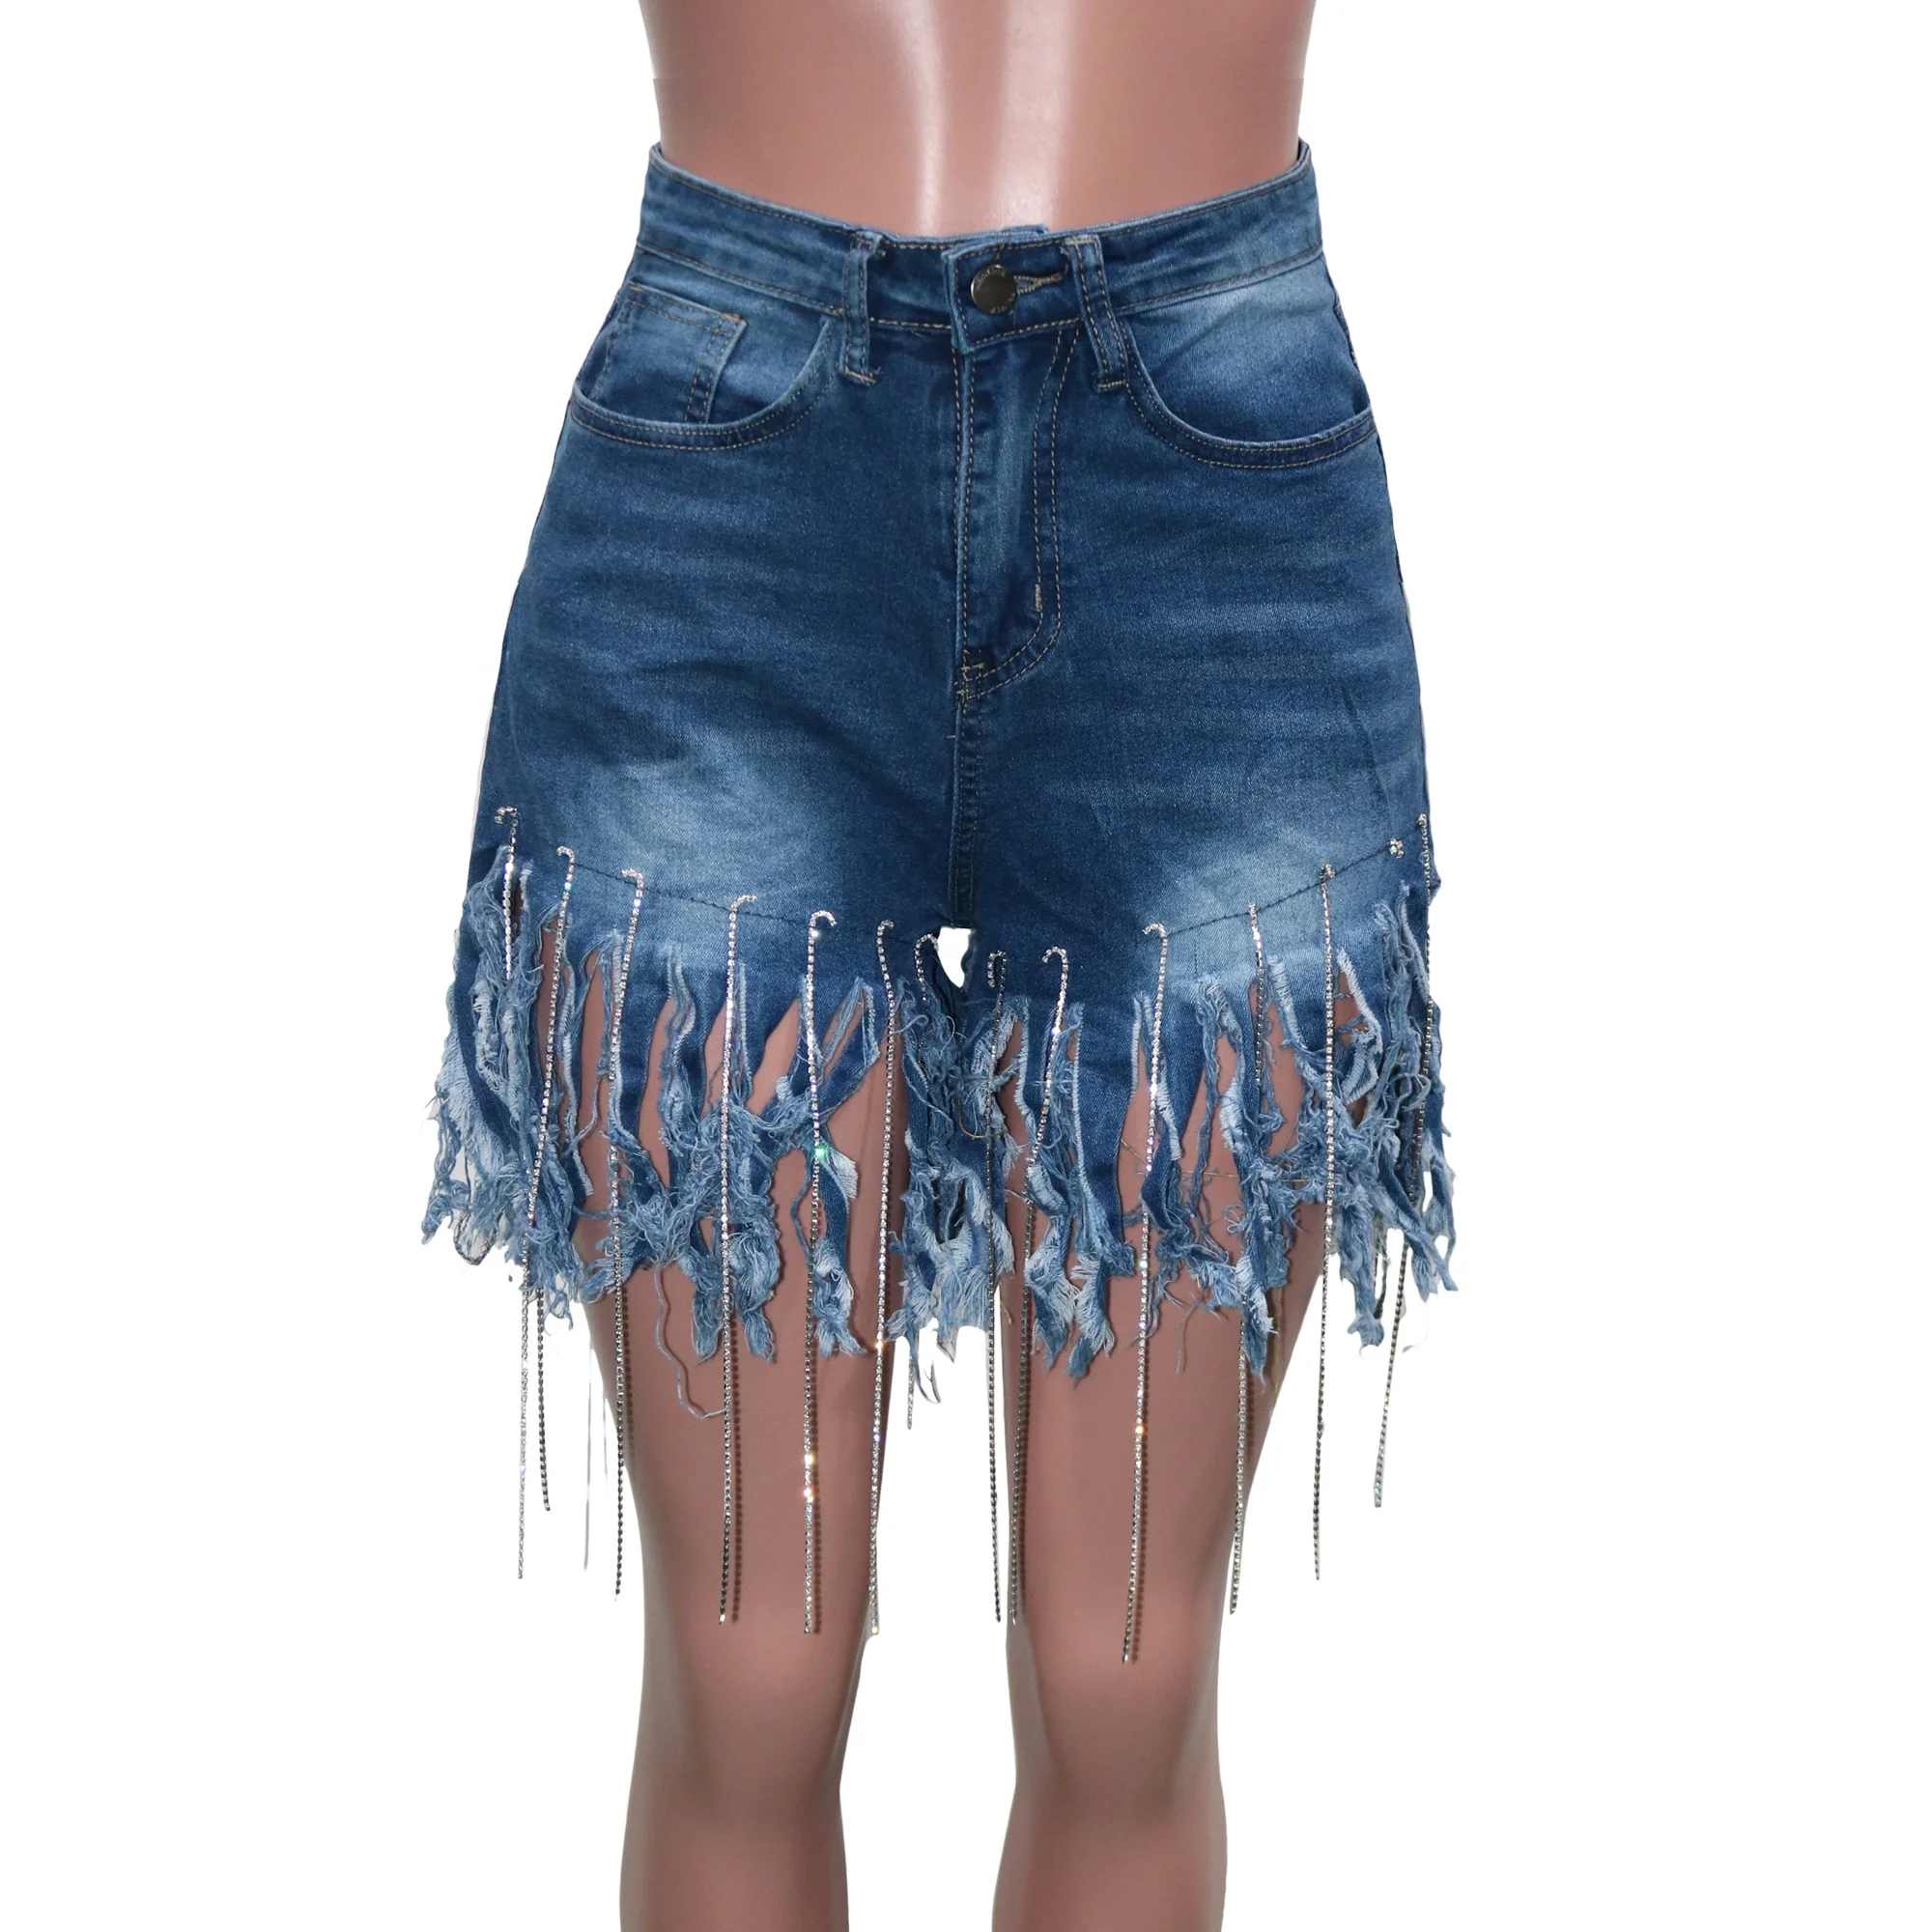 

2021 Hot Sales Fashion Tassel Buttocks Jeans Skirt Women Denim high waisted shorts women